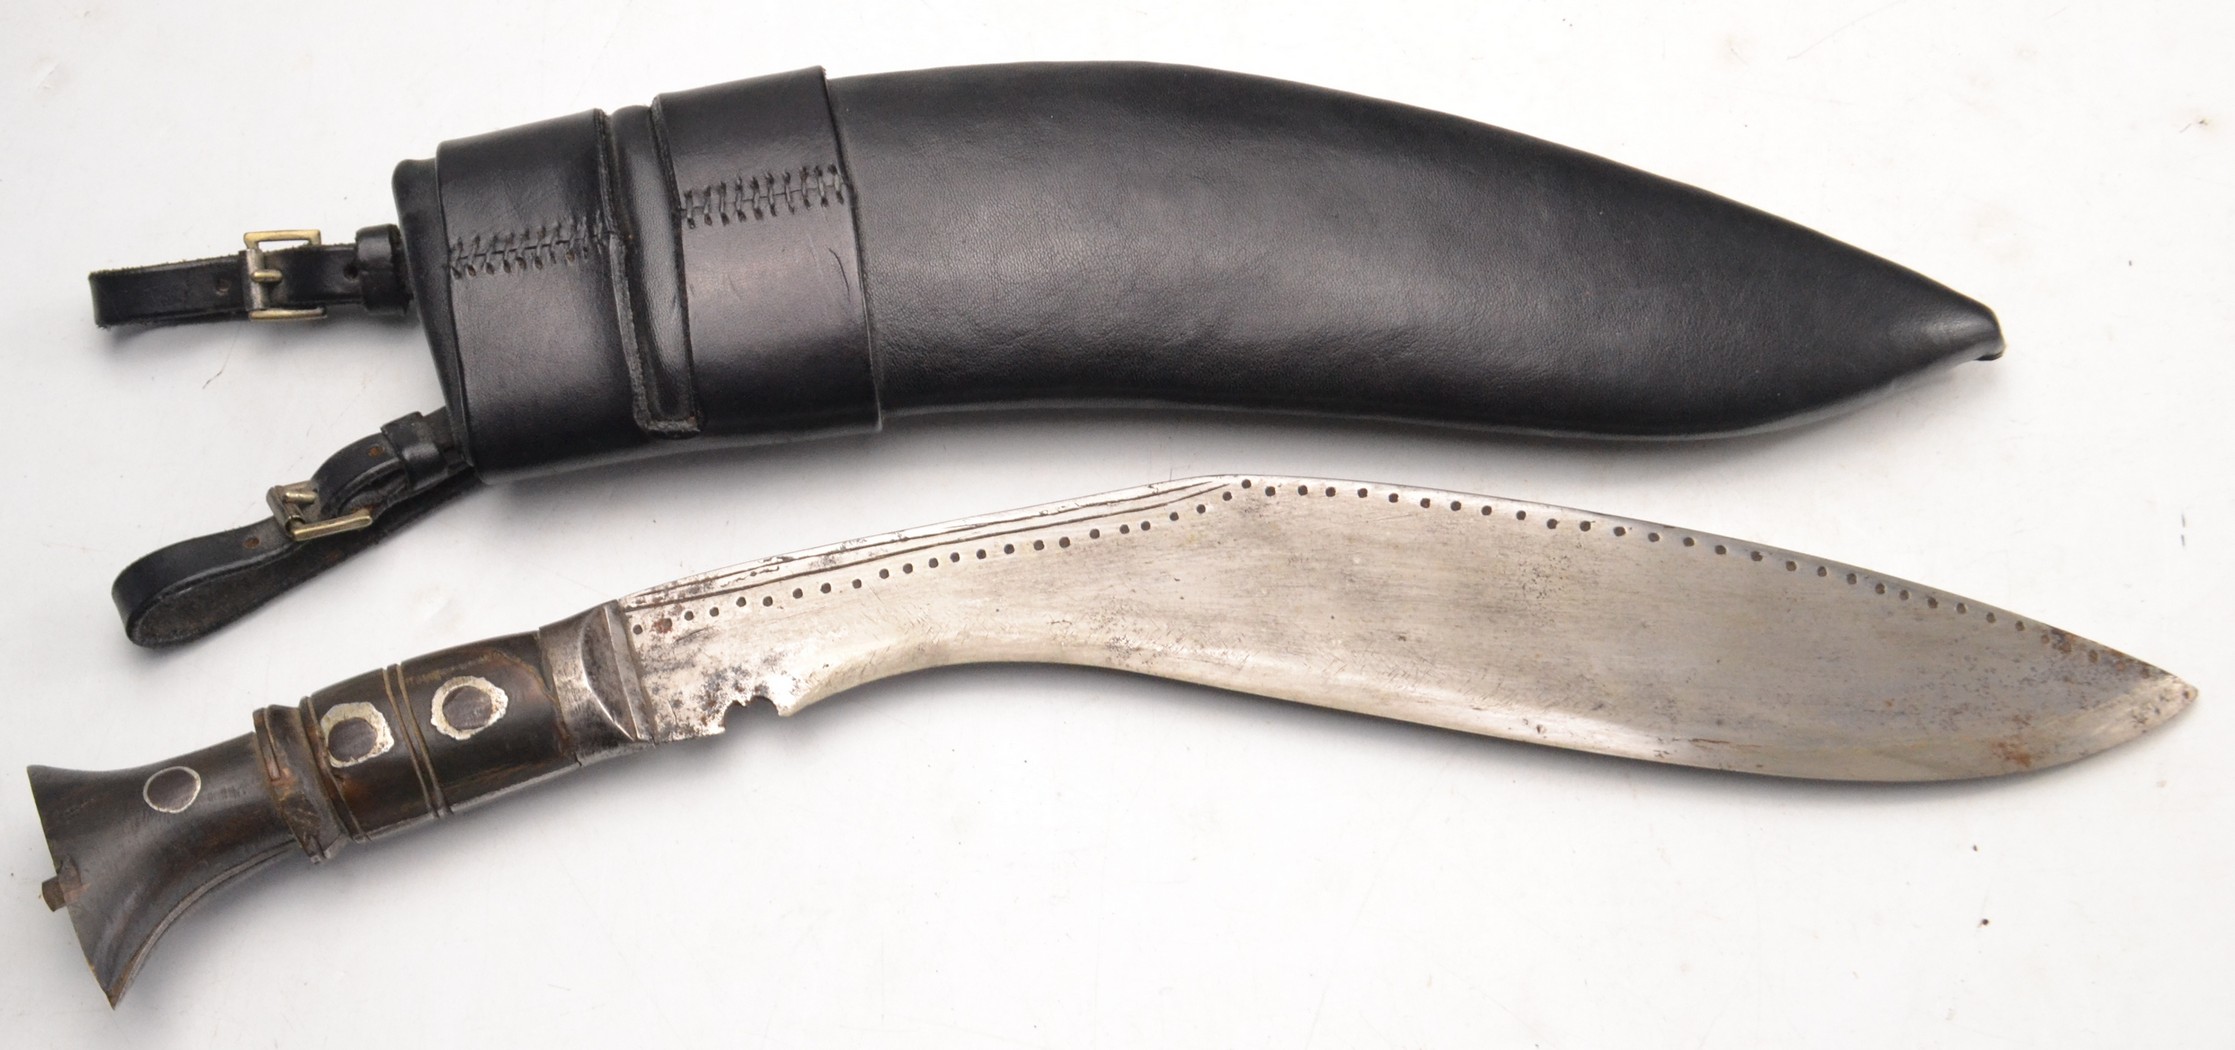 Gurkha Kukri knife with black leather sheath, blade length 30cm approx.